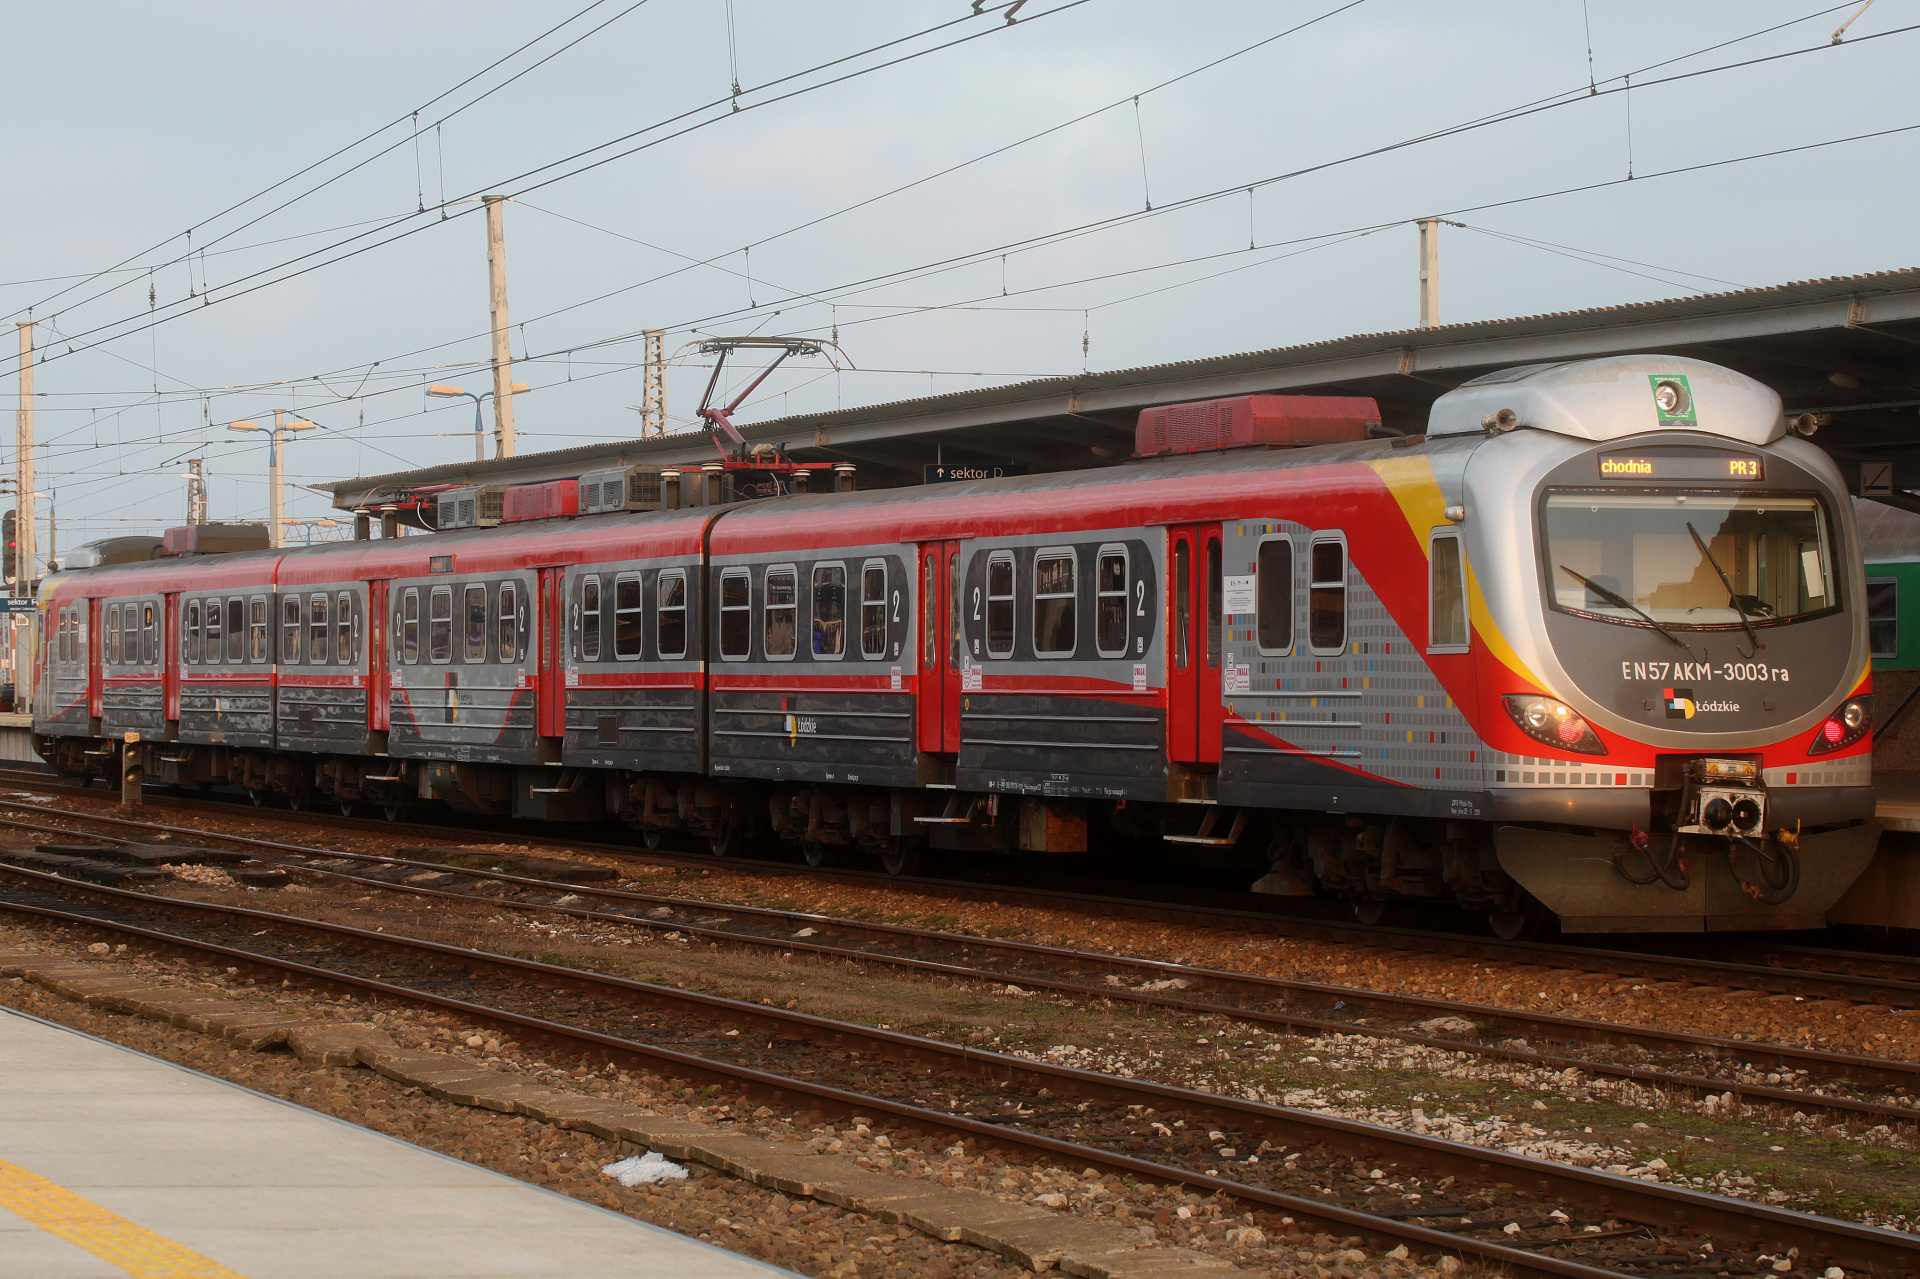 EN57AKM-3003 (Vehicles » Trains and Locomotives » Pafawag 5B/6B EN57 and revisions)